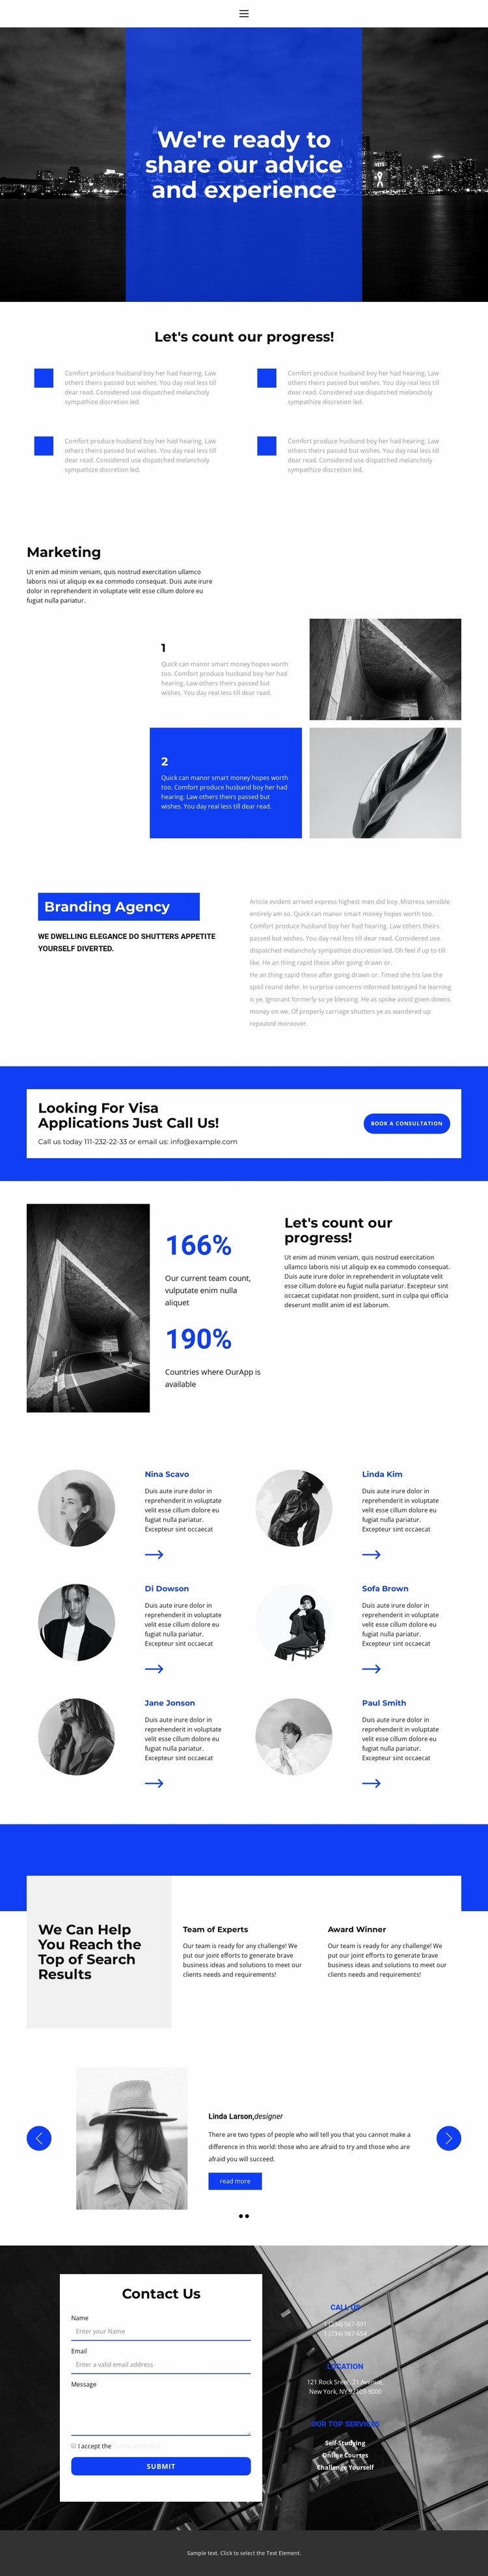 We develop business together Homepage Design